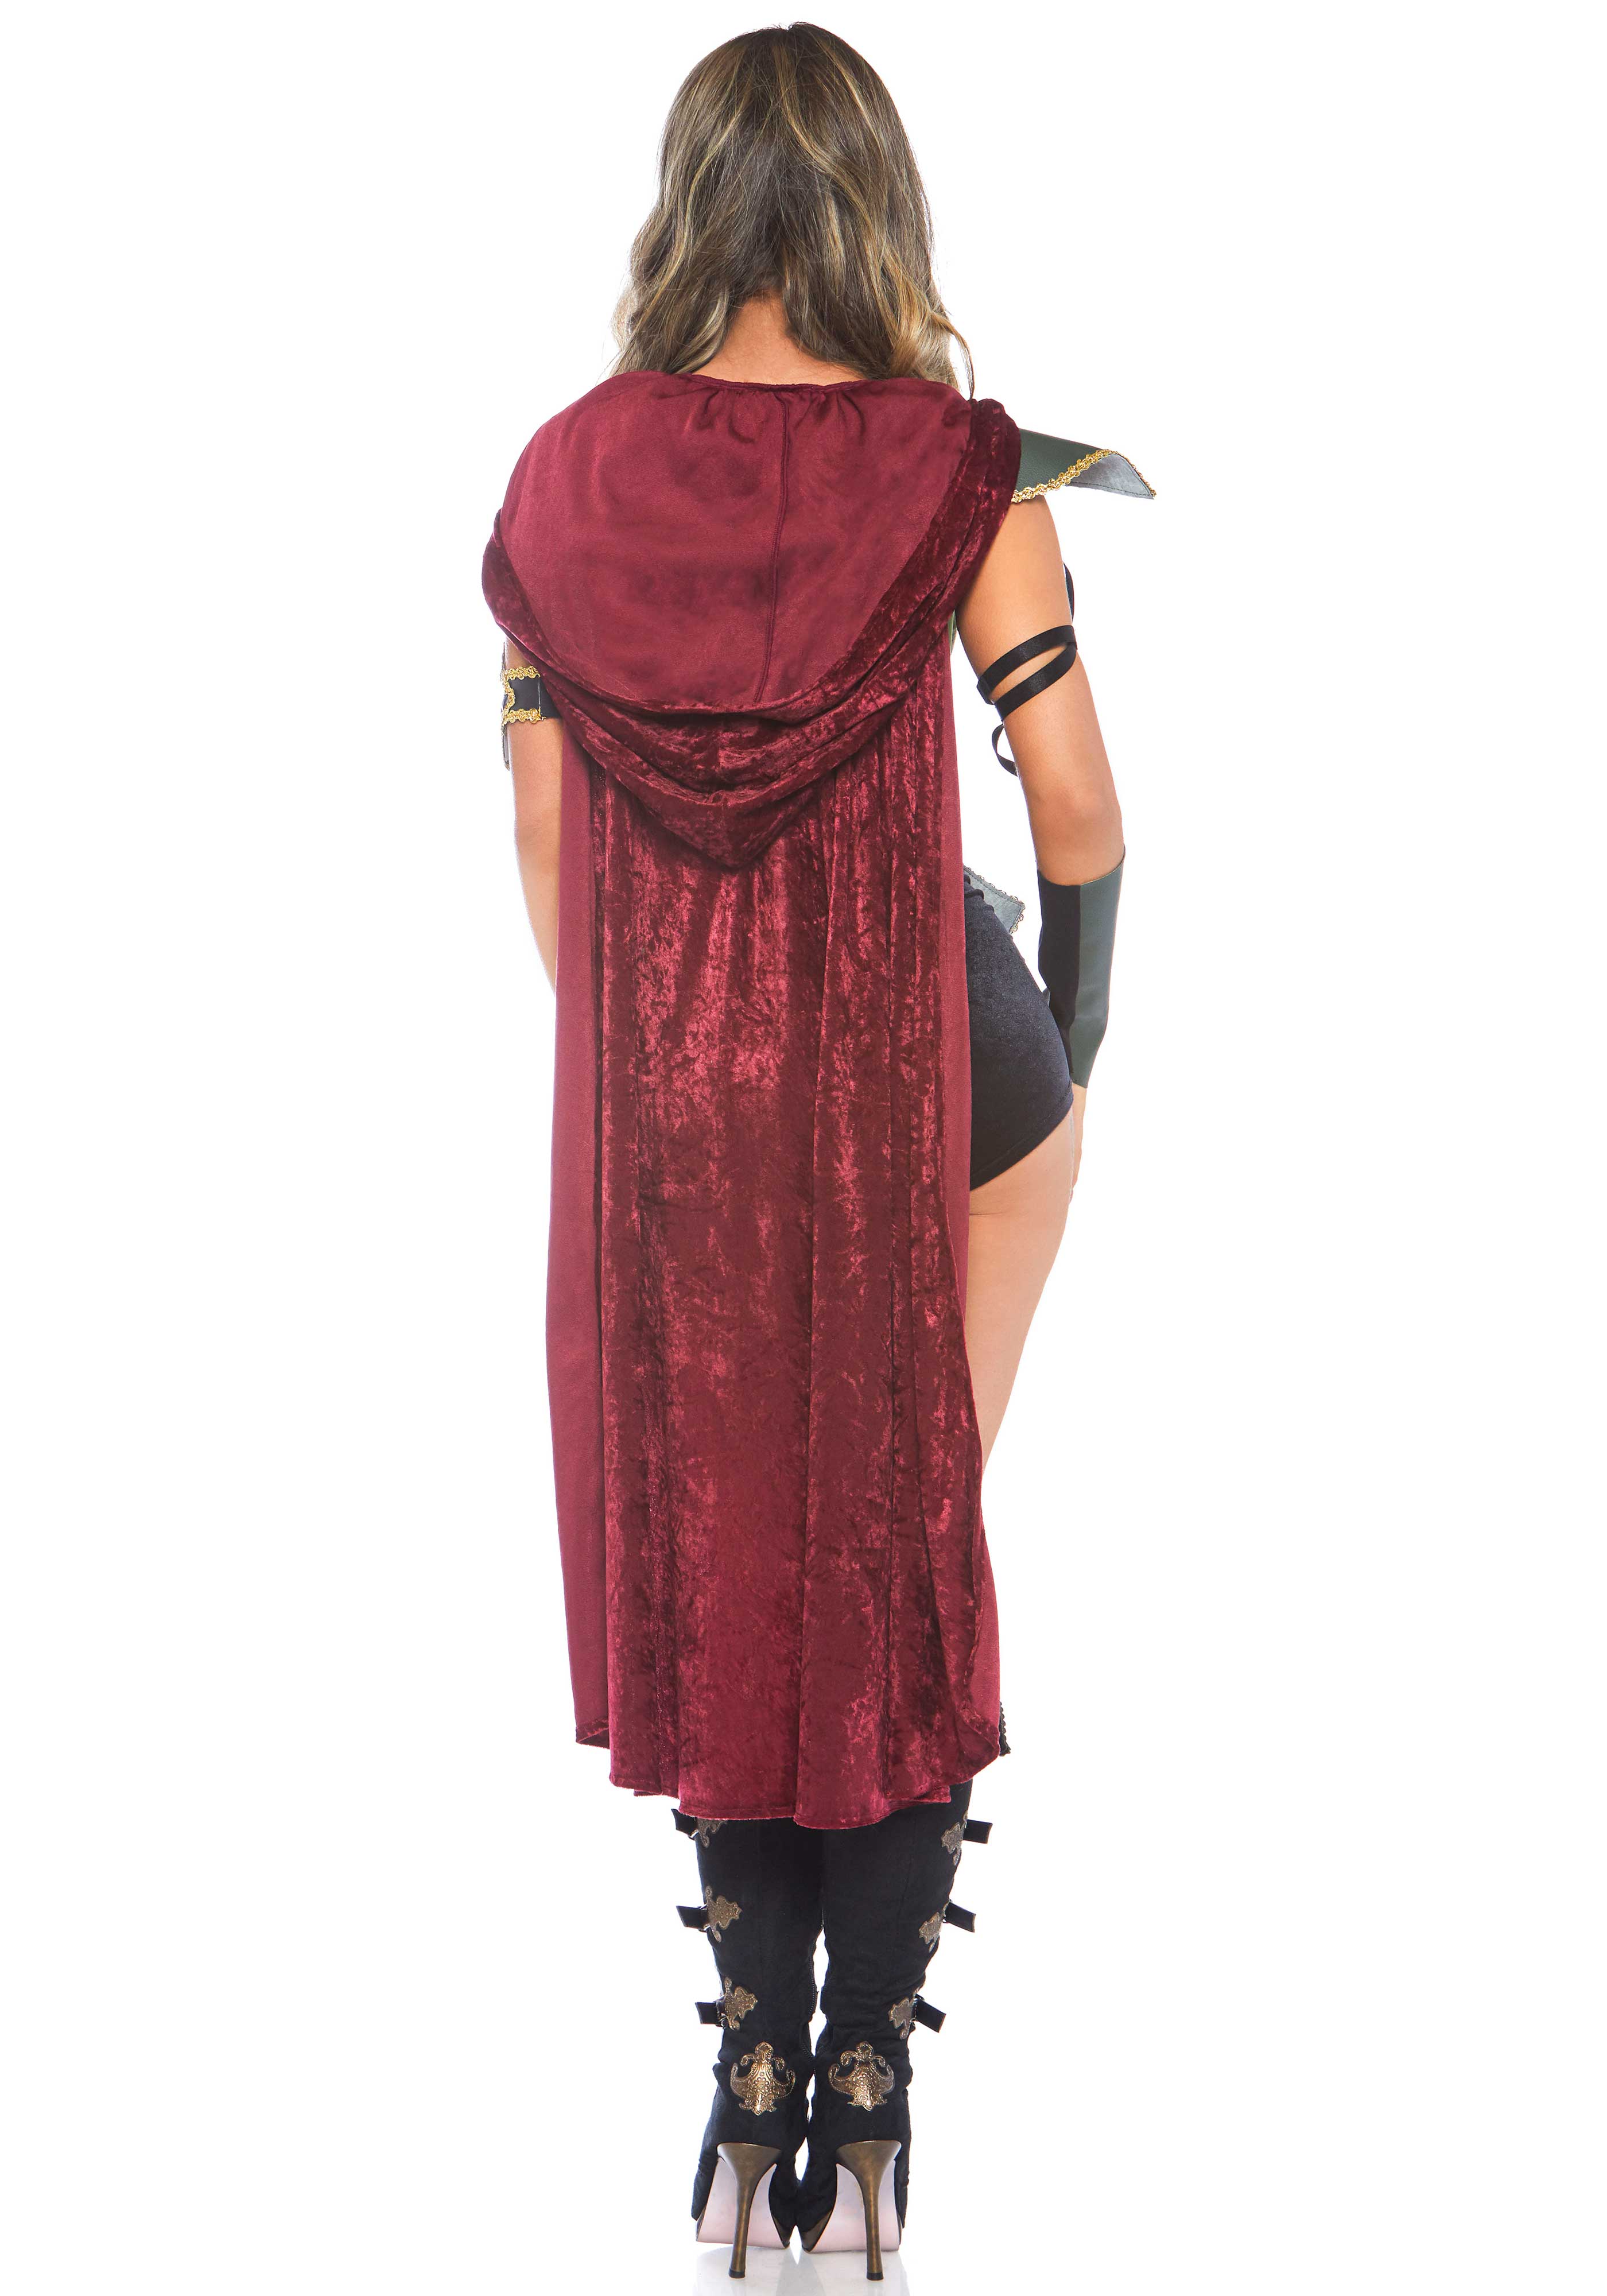 Adult women's Robin Hood costume